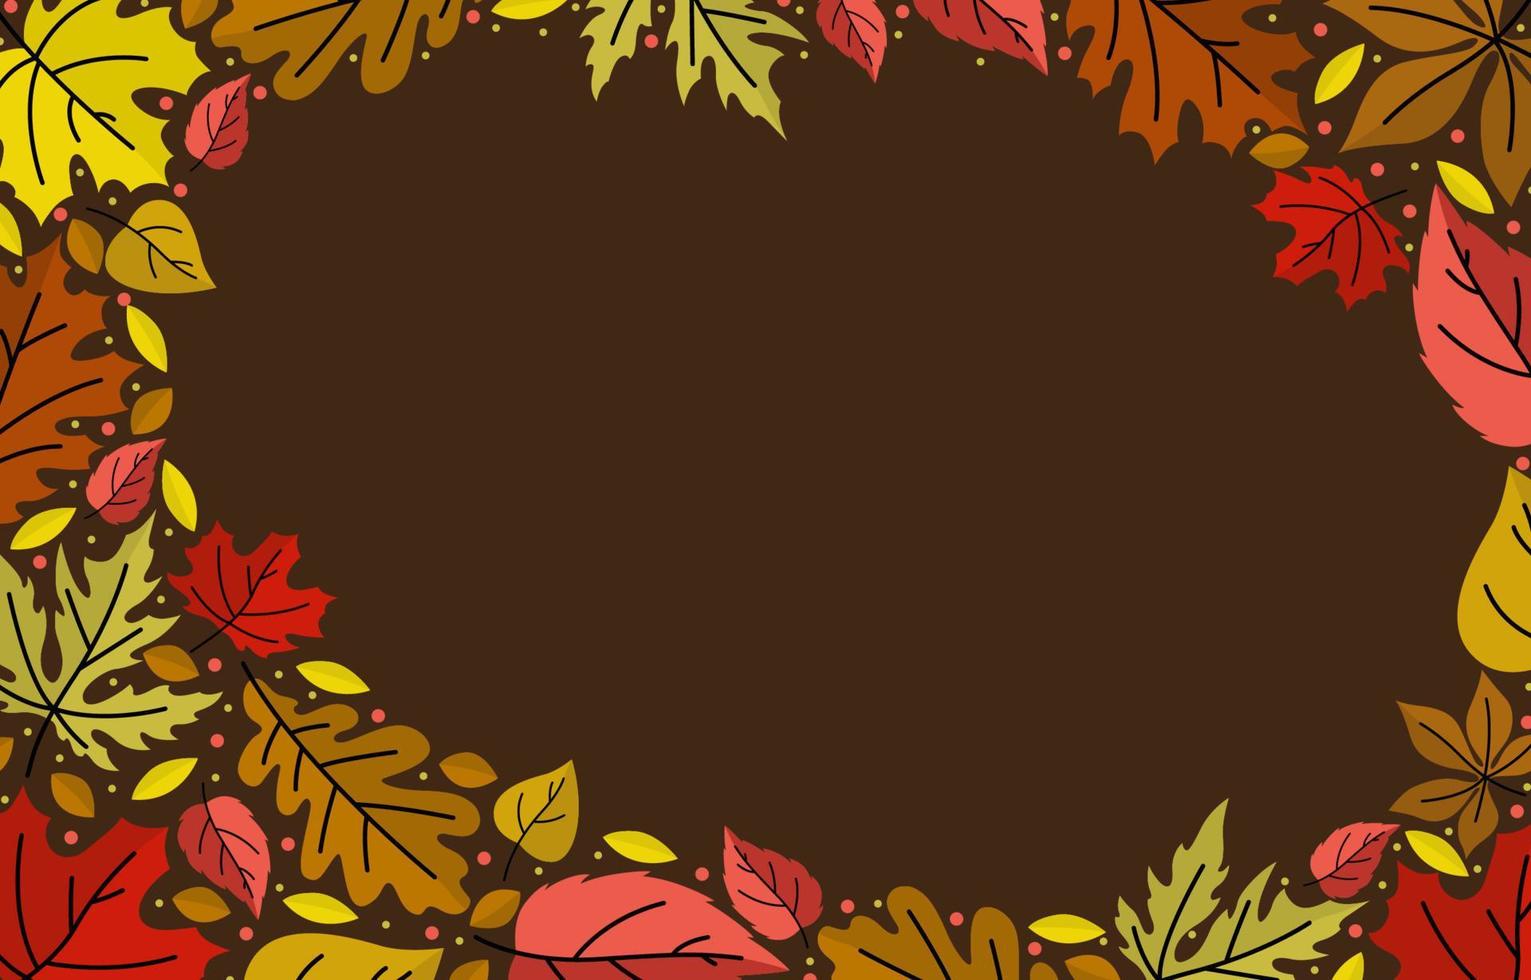 Fallen Autumn Leaves Frame Background vector